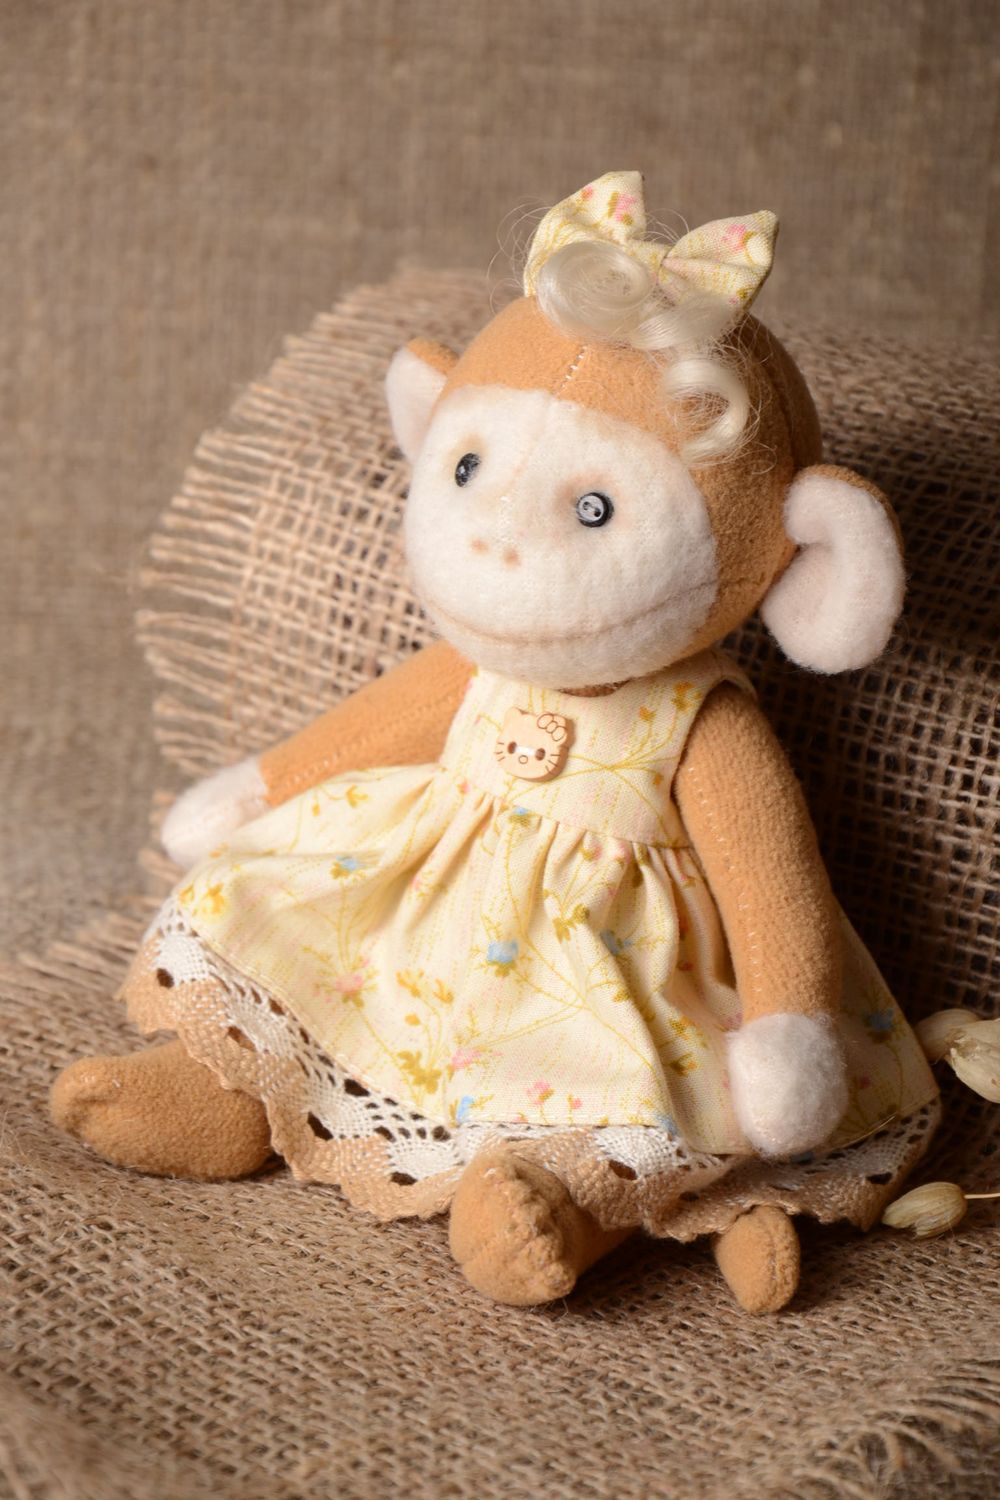 Handmade soft toy monkey stuffed toy for children interior decor ideas photo 1